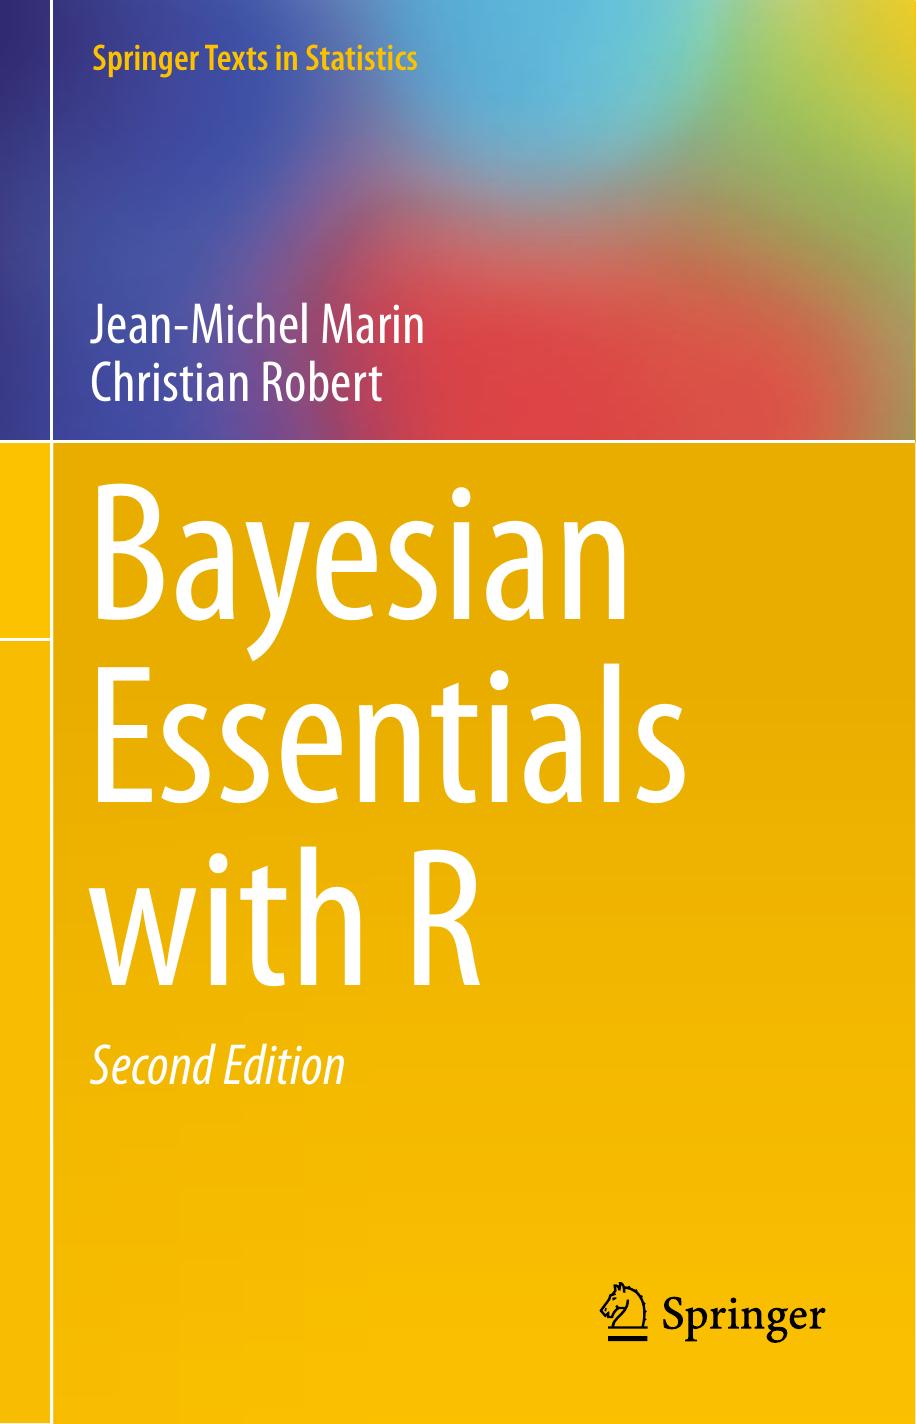 Bayesian Essentials with R, 2ed, Jean-Michel Marin, Christian Robert, 2013.pdf